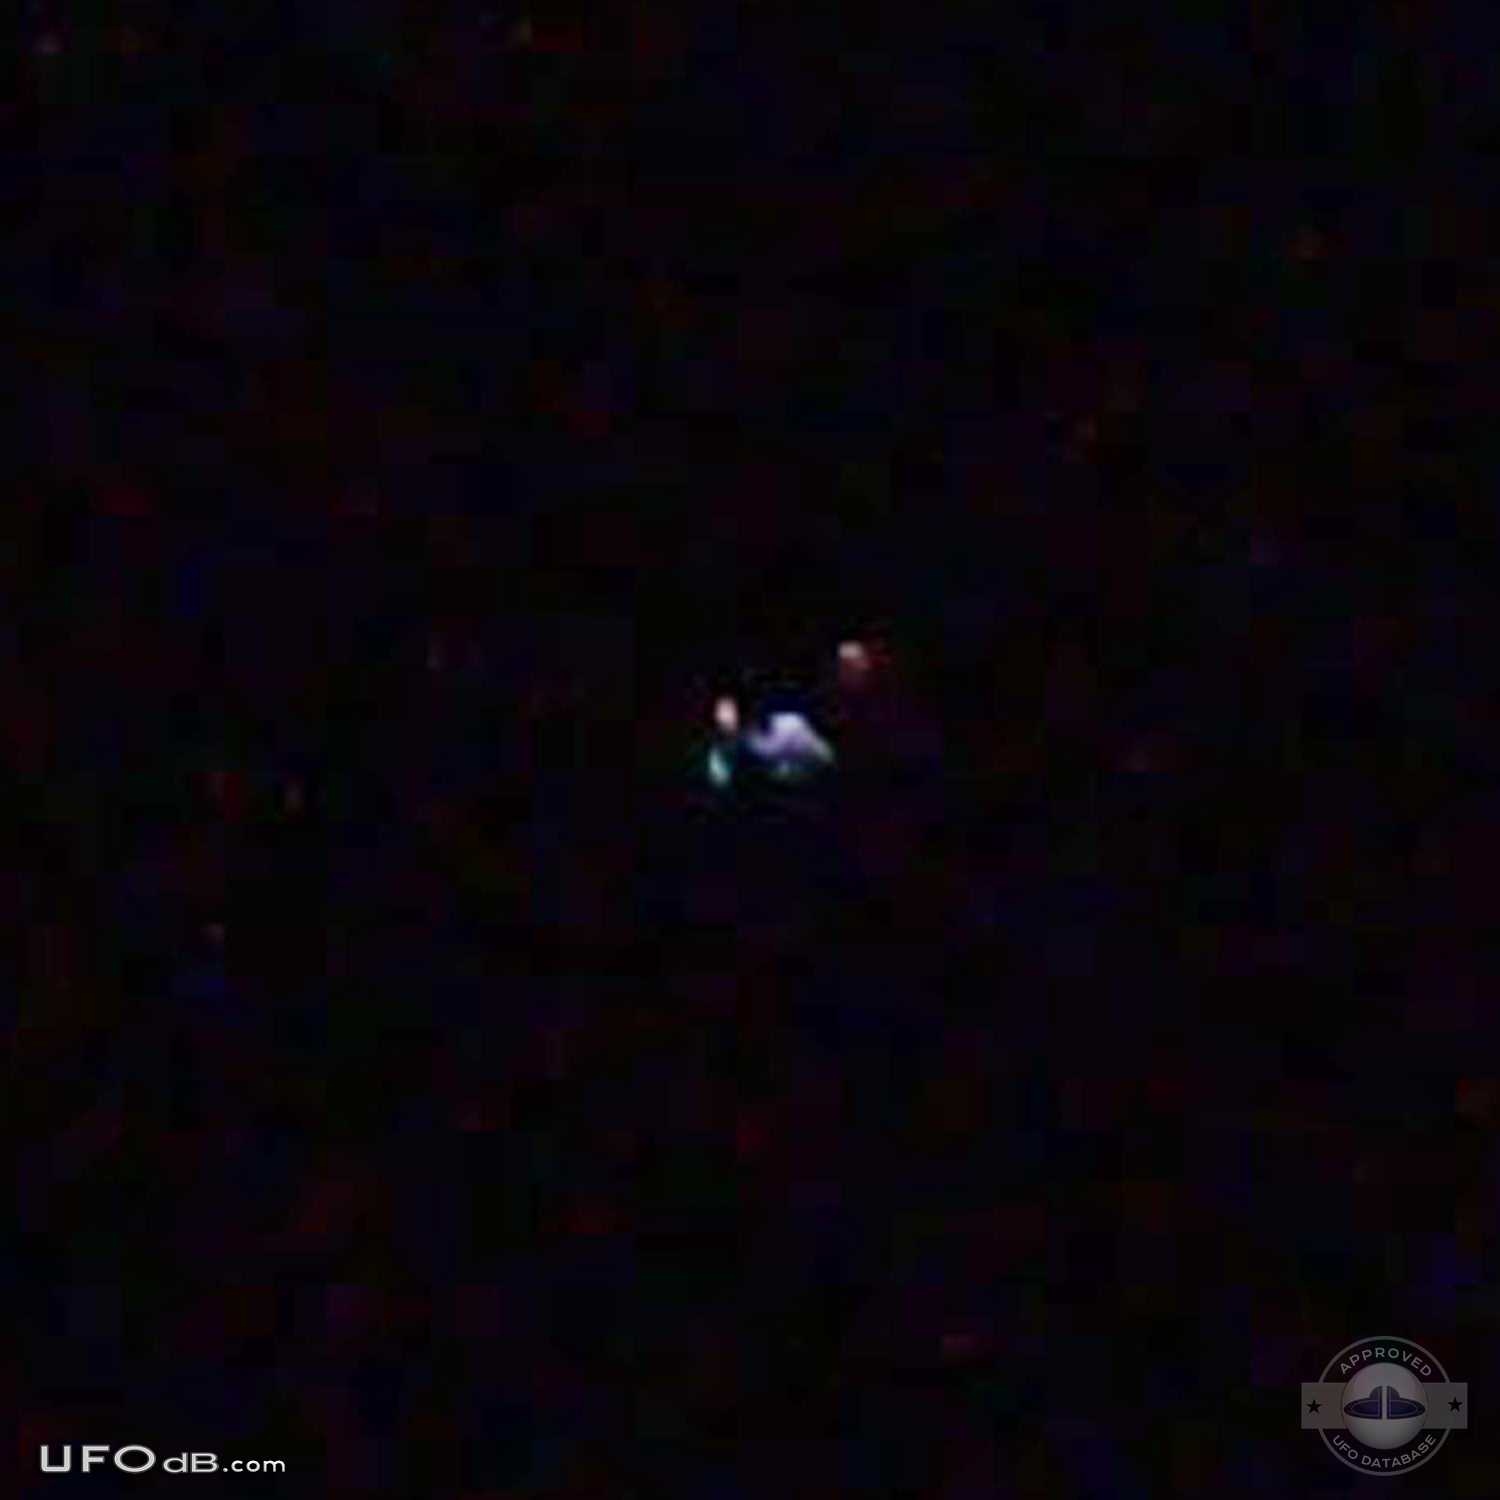 UFO with strange shape caught on picture over Santa Tecla, El Salvador UFO Picture #387-1